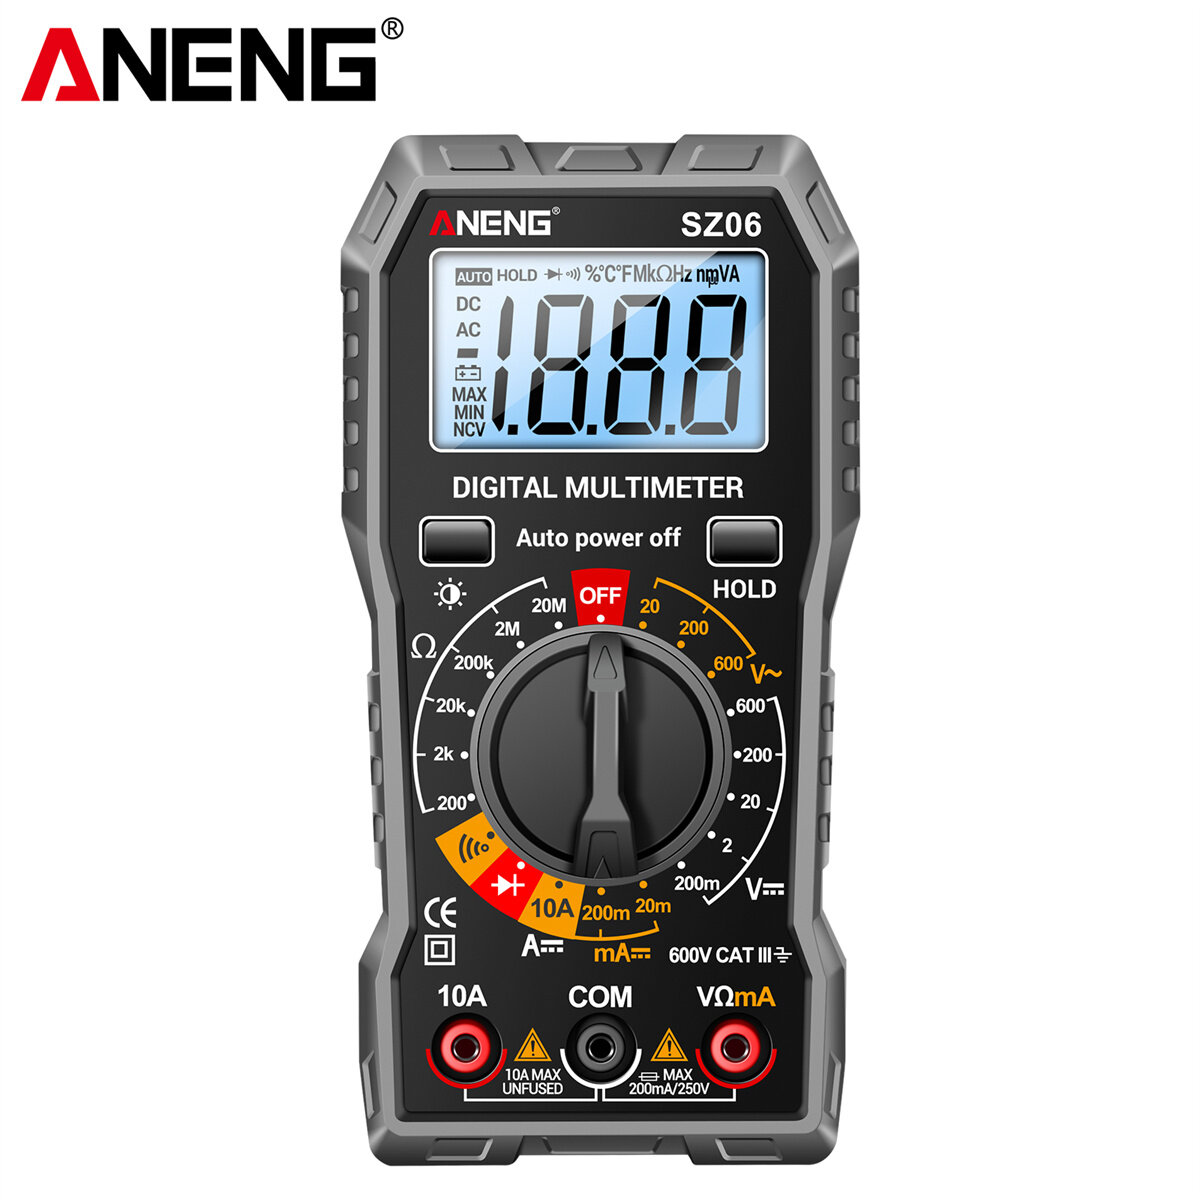 

ANENG SZ06 Digital Multimeter High Accuracy DC AC Voltage Current Resistance Tester Auto Shutdown 2000 Max Count Backlit